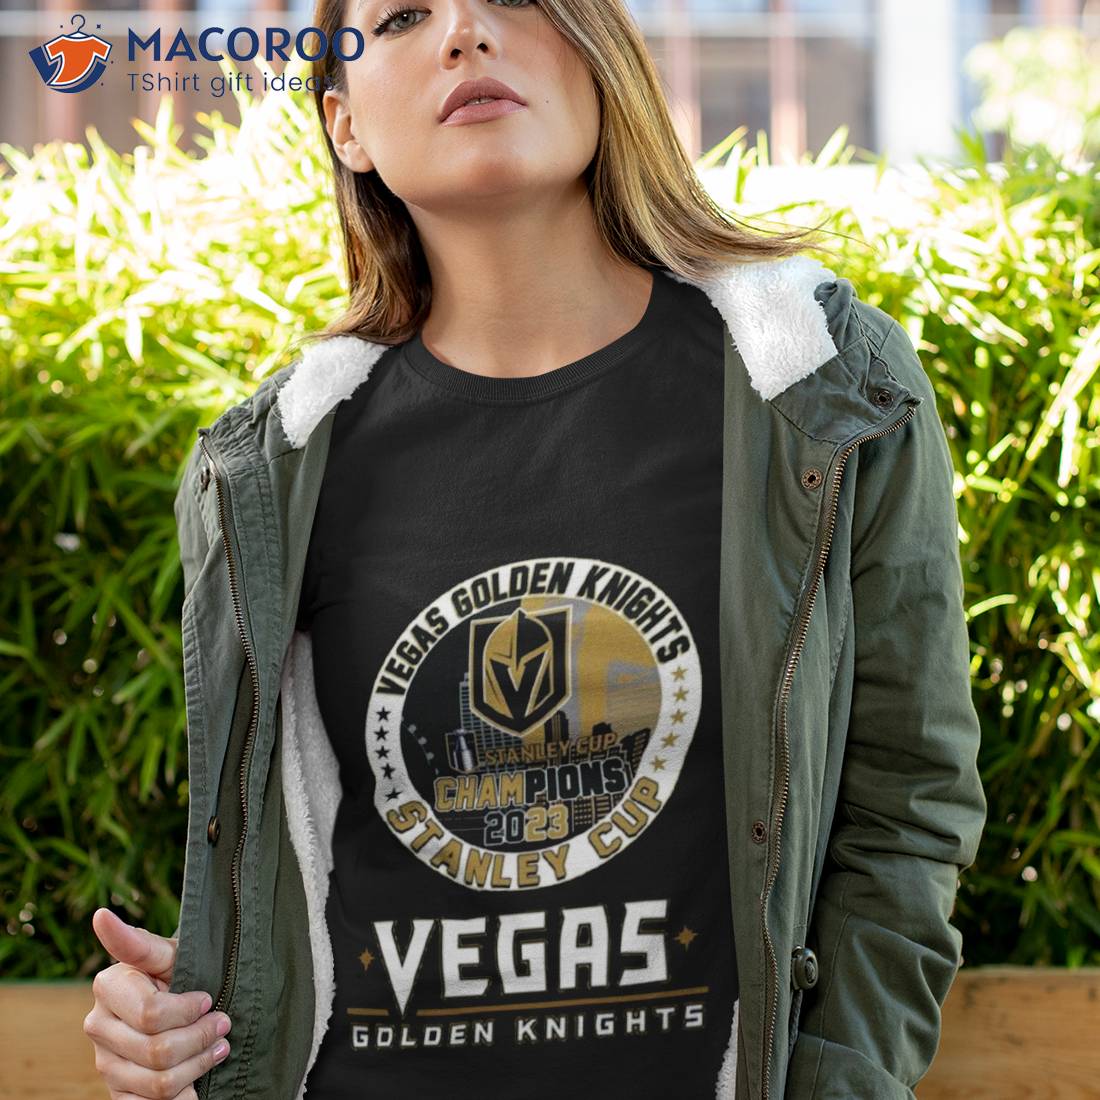 Men's Fanatics Branded Black Vegas Golden Knights 2023 Stanley Cup Champions Jersey Roster T-Shirt